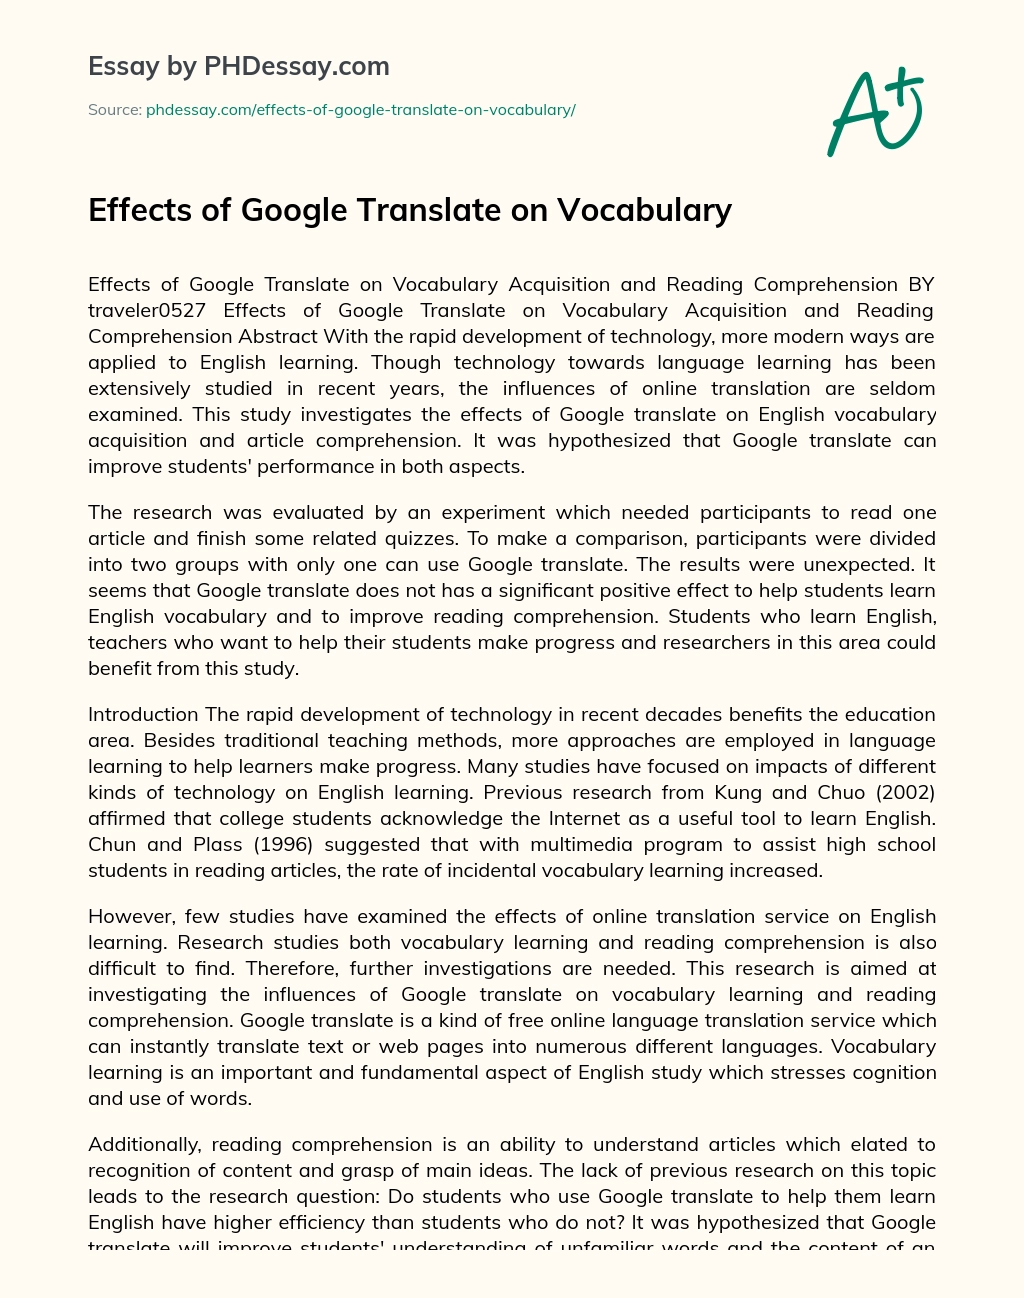 Effects of Google Translate on Vocabulary essay